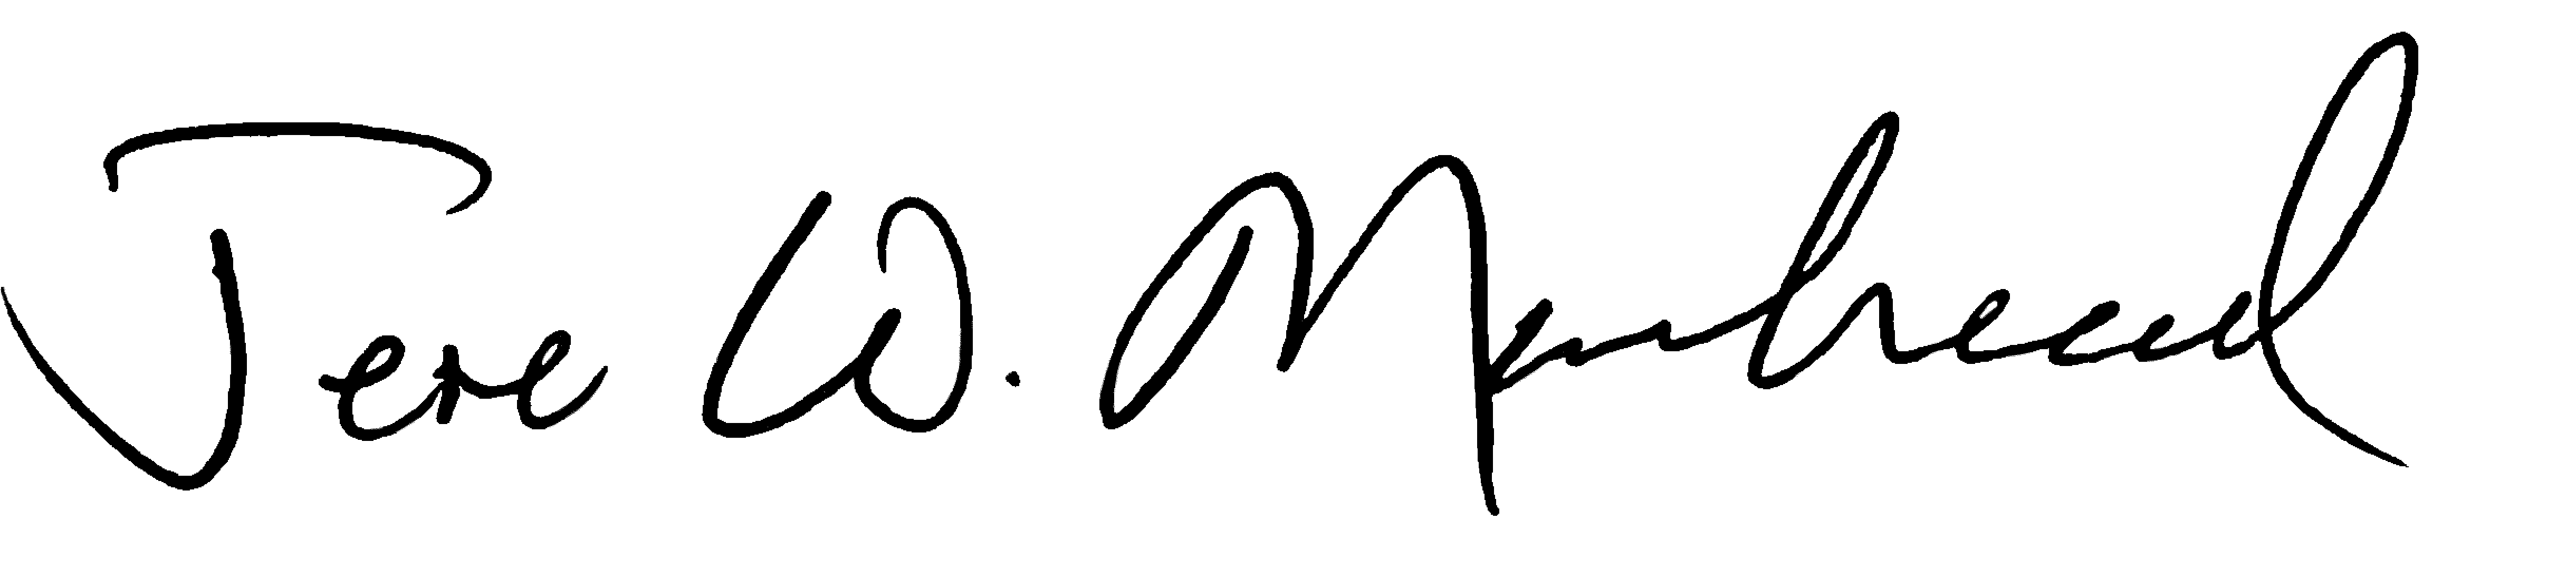 Jere Morehead's signature